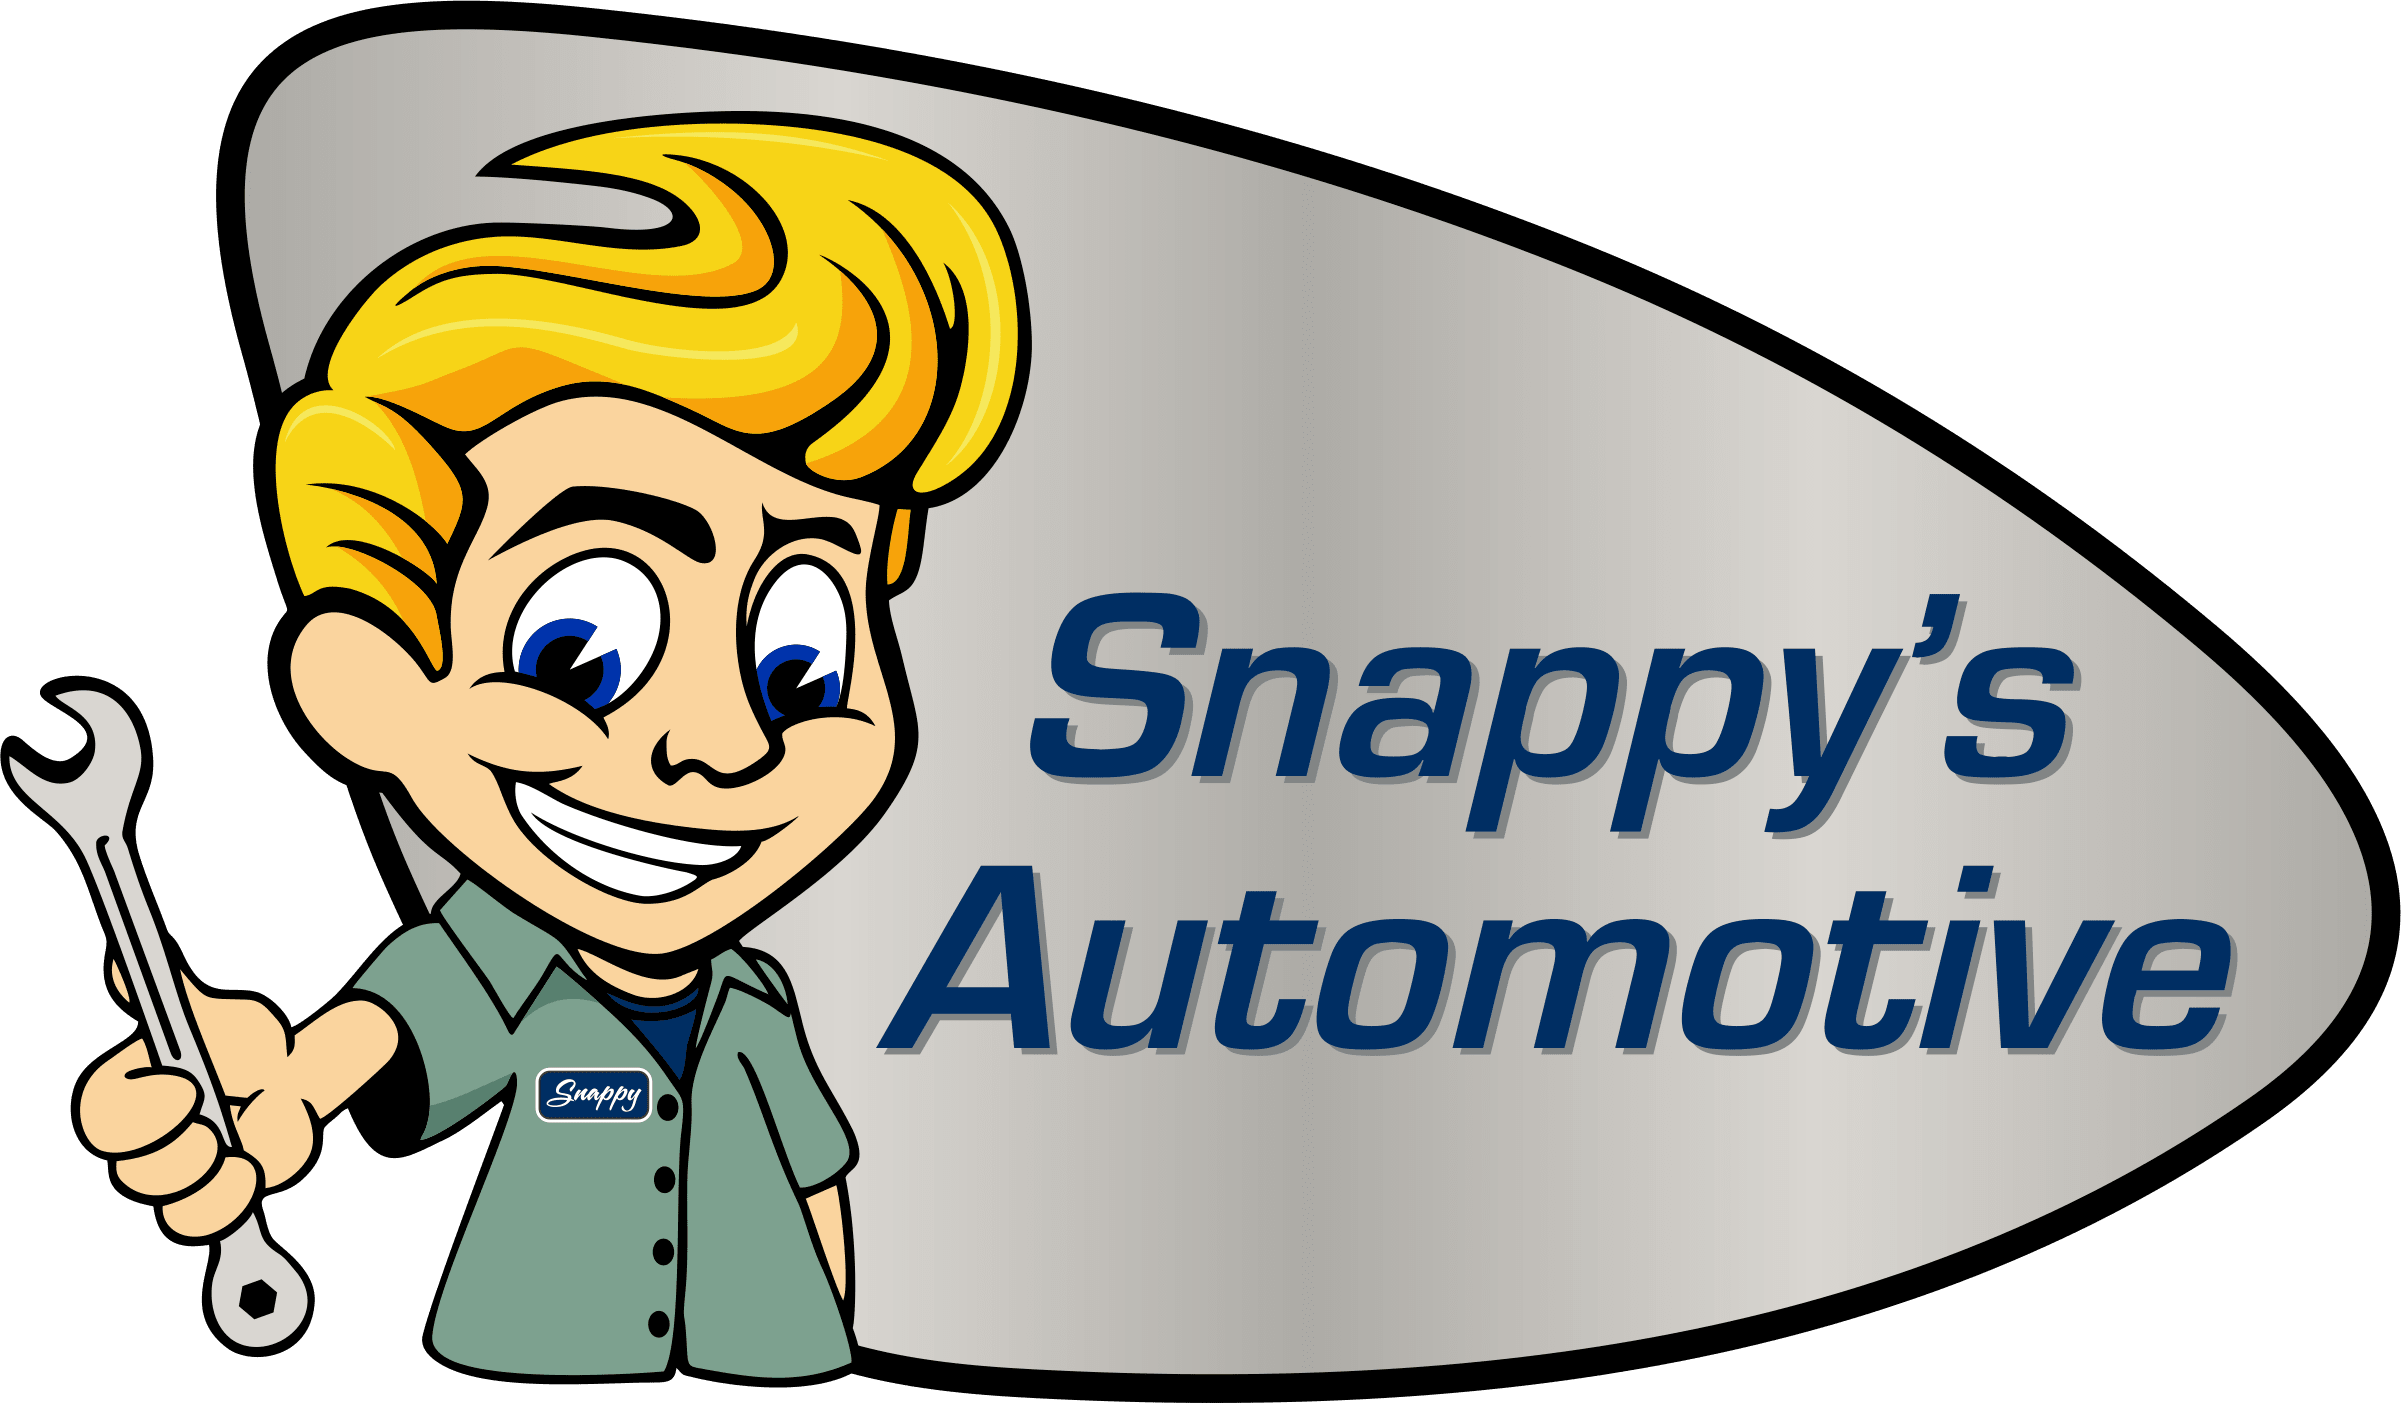 Snappy's Automotive logo